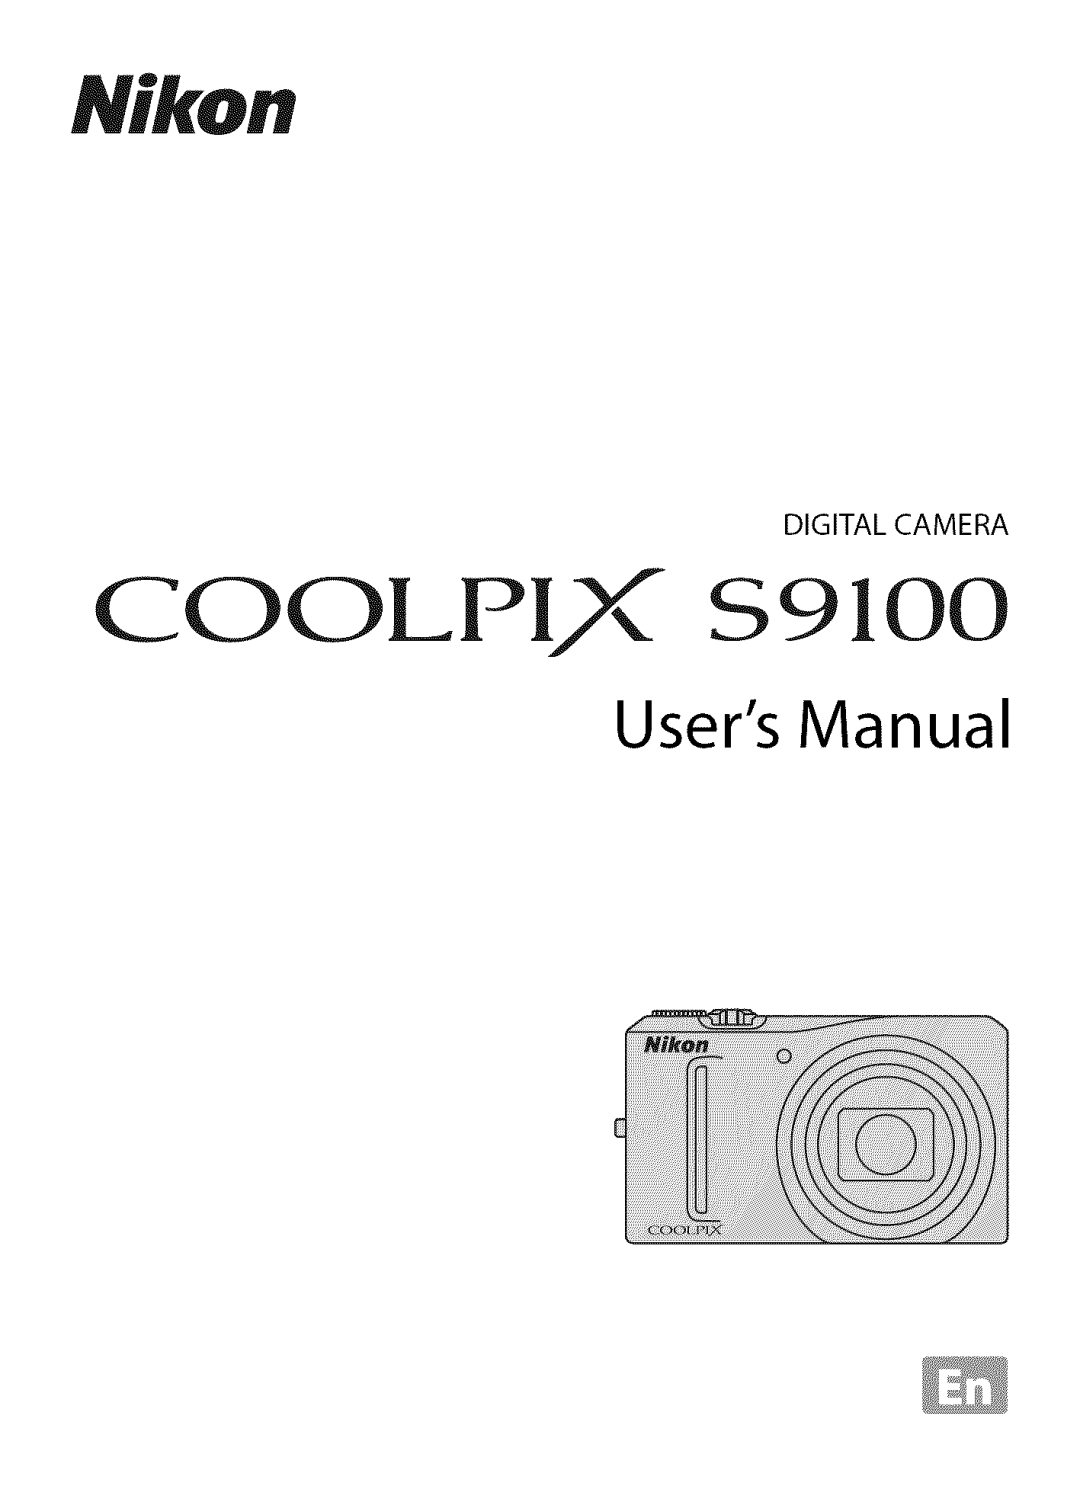 Nikon S9100 user manual Coolp, Nikon, Users Manual, Digital Camera 